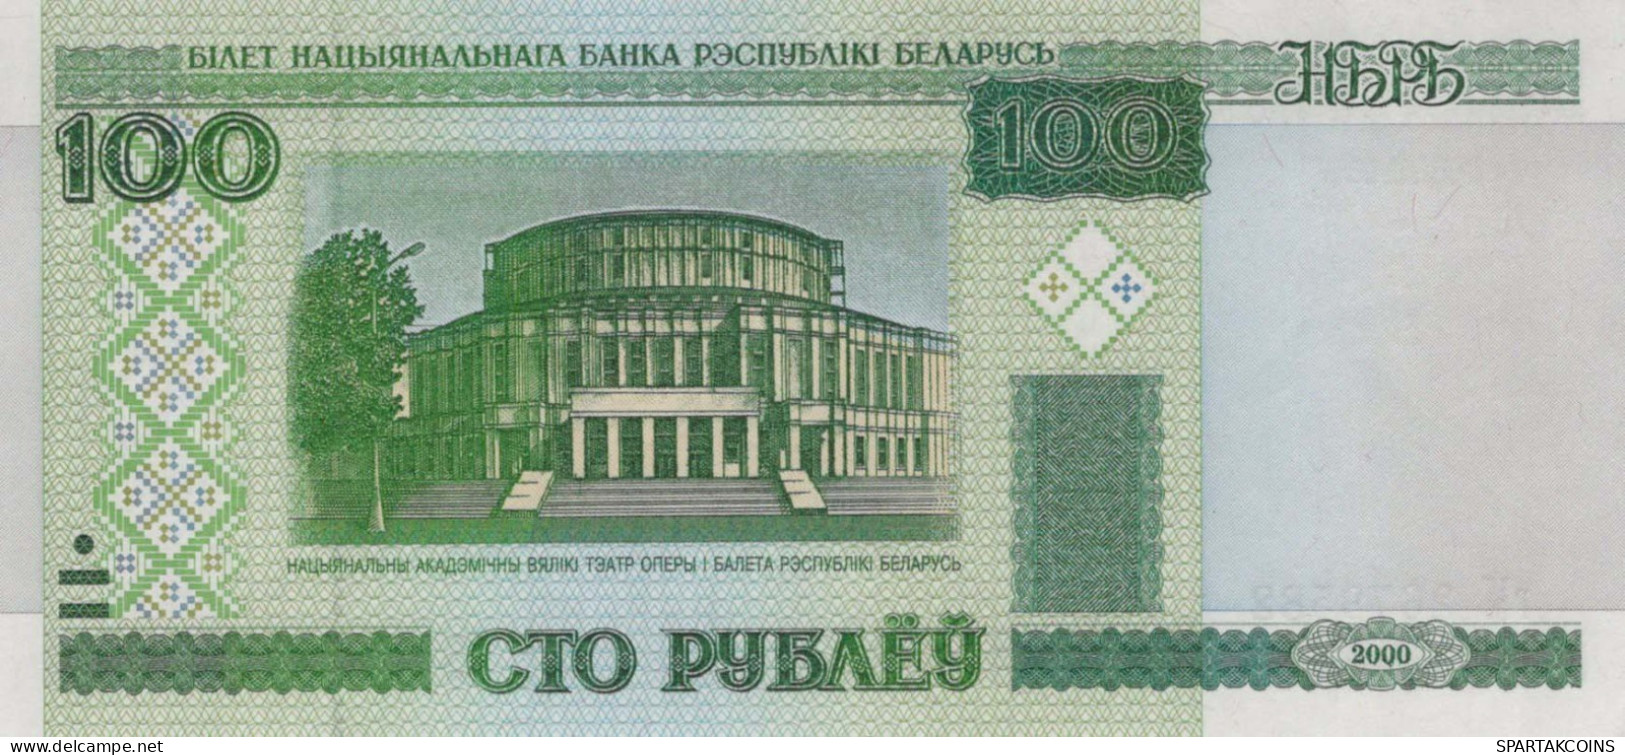 100 RUBLES 2000 BELARUS Papiergeld Banknote #PJ304 - [11] Emisiones Locales